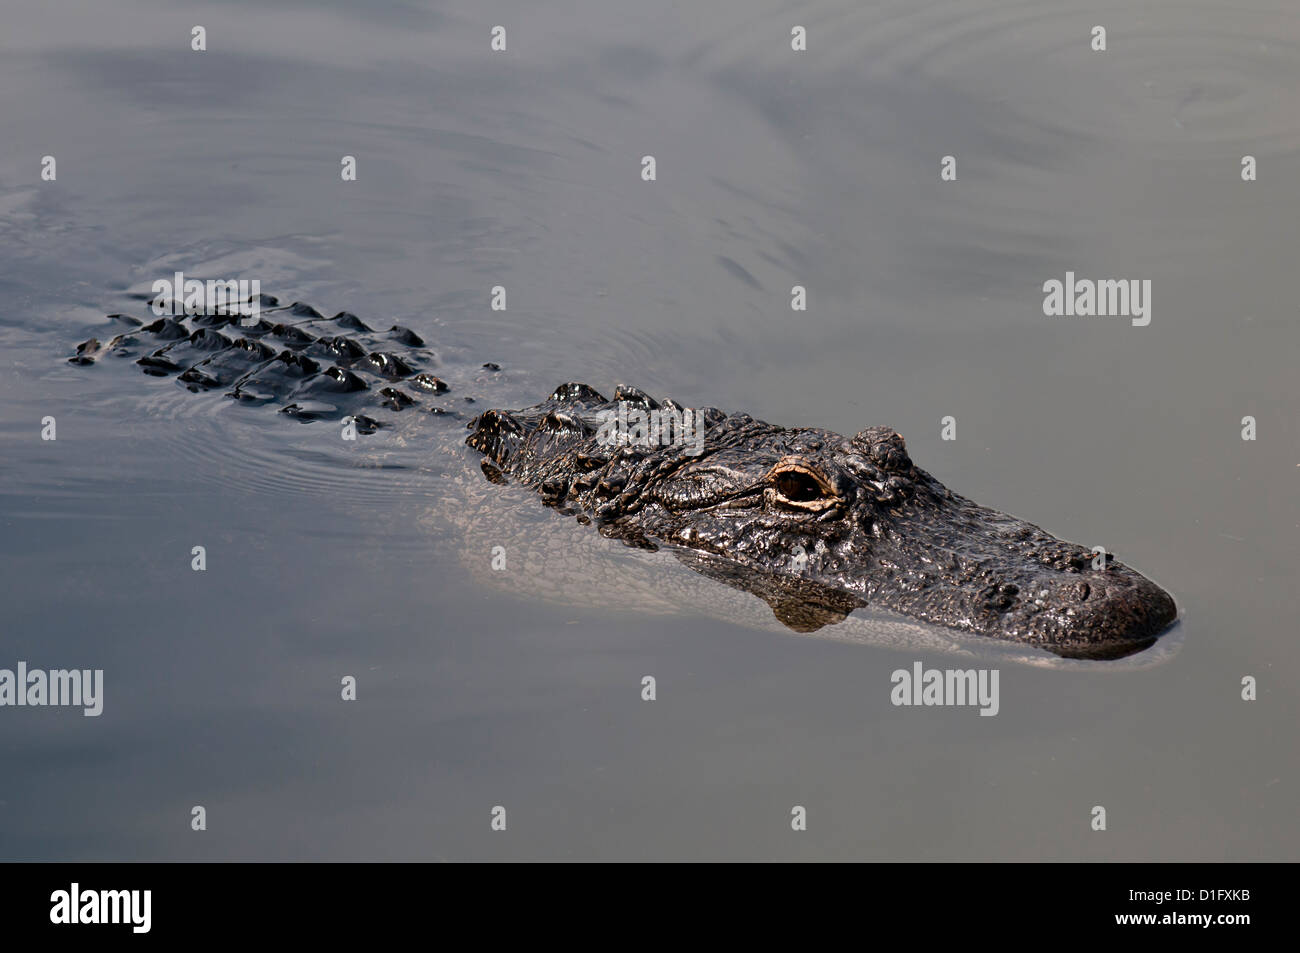 American alligator (Alligator mississippiensis), Everglades, Florida, United States of America, North America Stock Photo